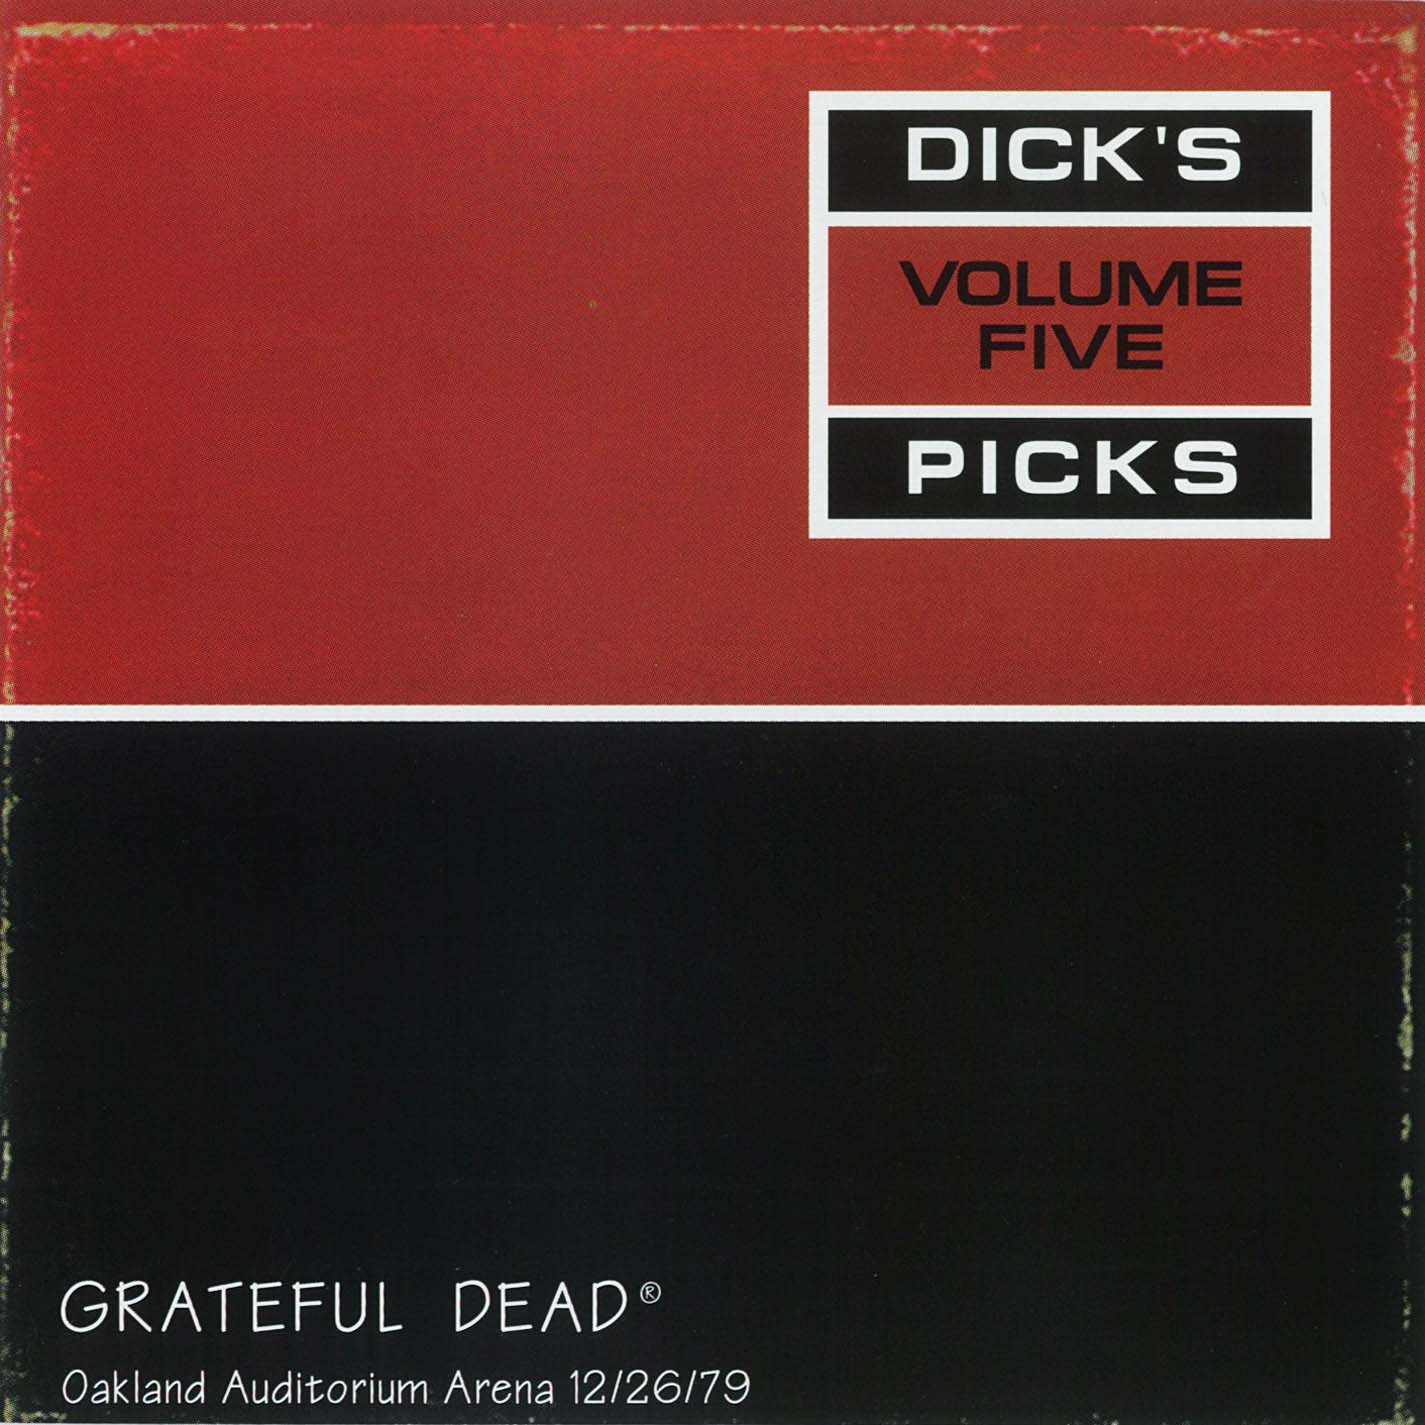 Grateful Dead Dick's Picks 5 album cover artwork